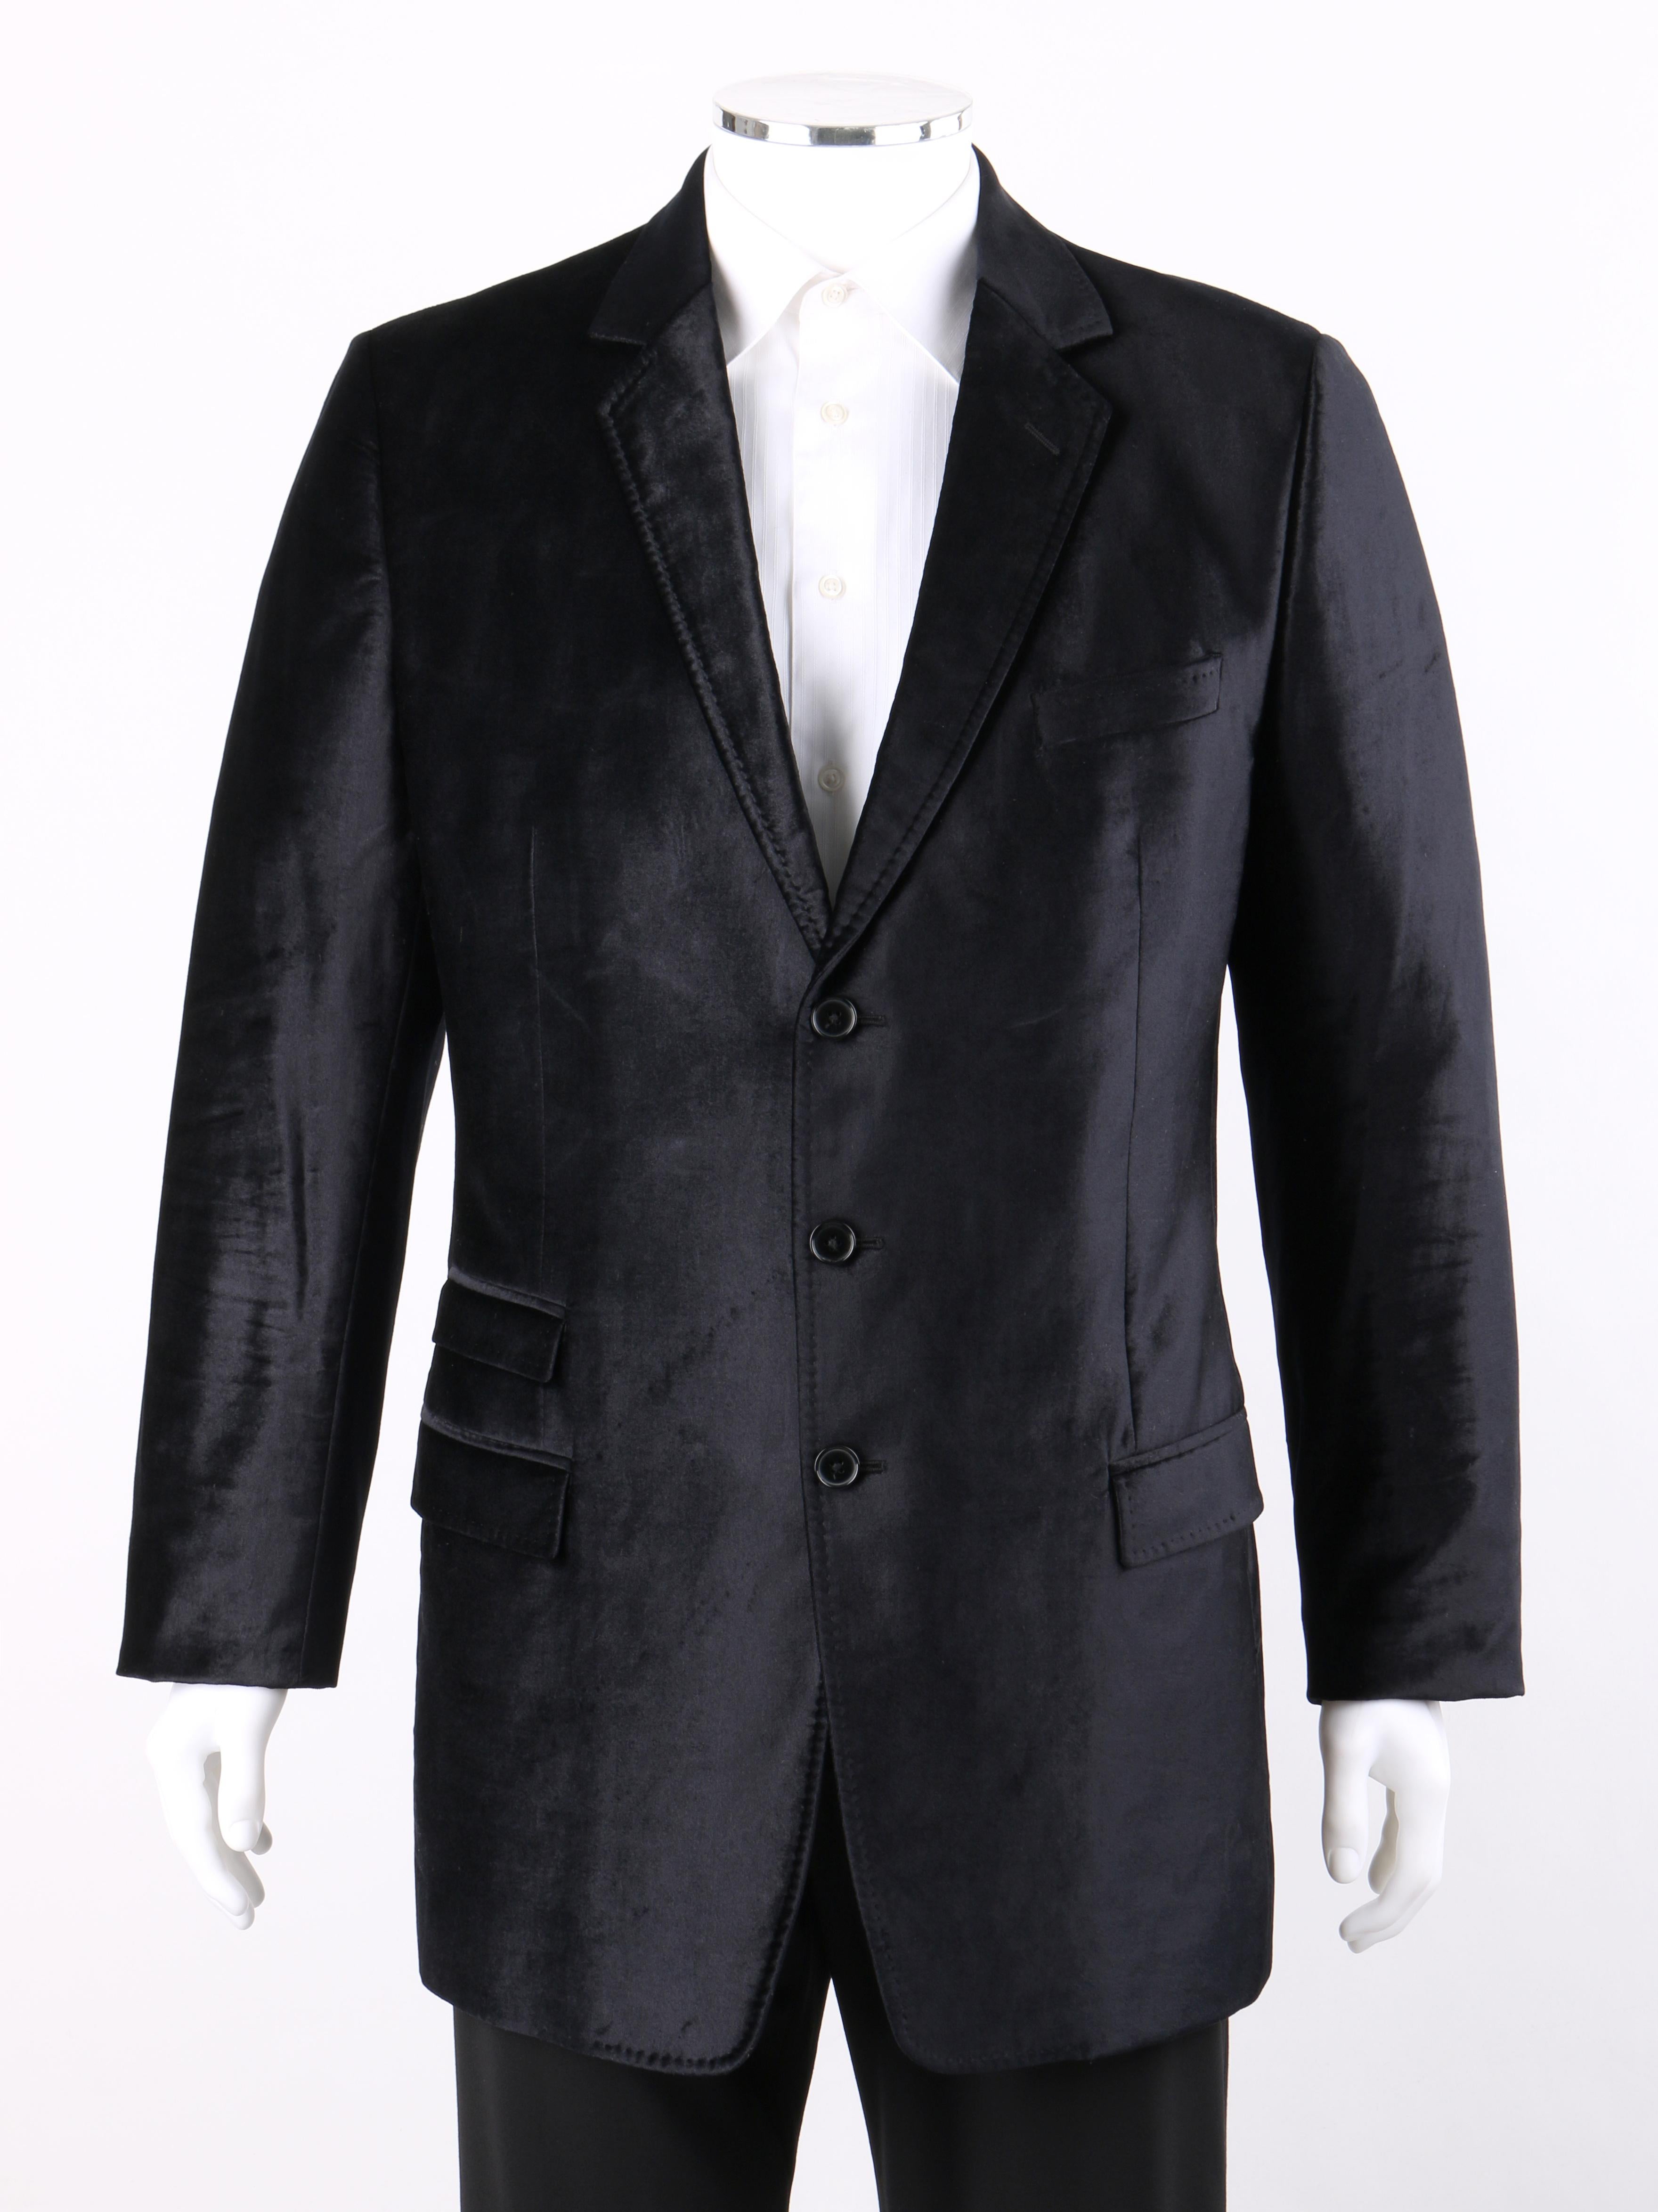 DESCRIPTION: DOLCE & GABBANA c.2007 MARTINI Black Velvet Three Button Blazer Evening Jacket
 
Brand / Manufacturer: Dolce & Gabbana; Martini
Collection: c.2007
Style: Three button blazer
Color(s): Black
Lined: Yes
Marked Fabric Content: Fabric